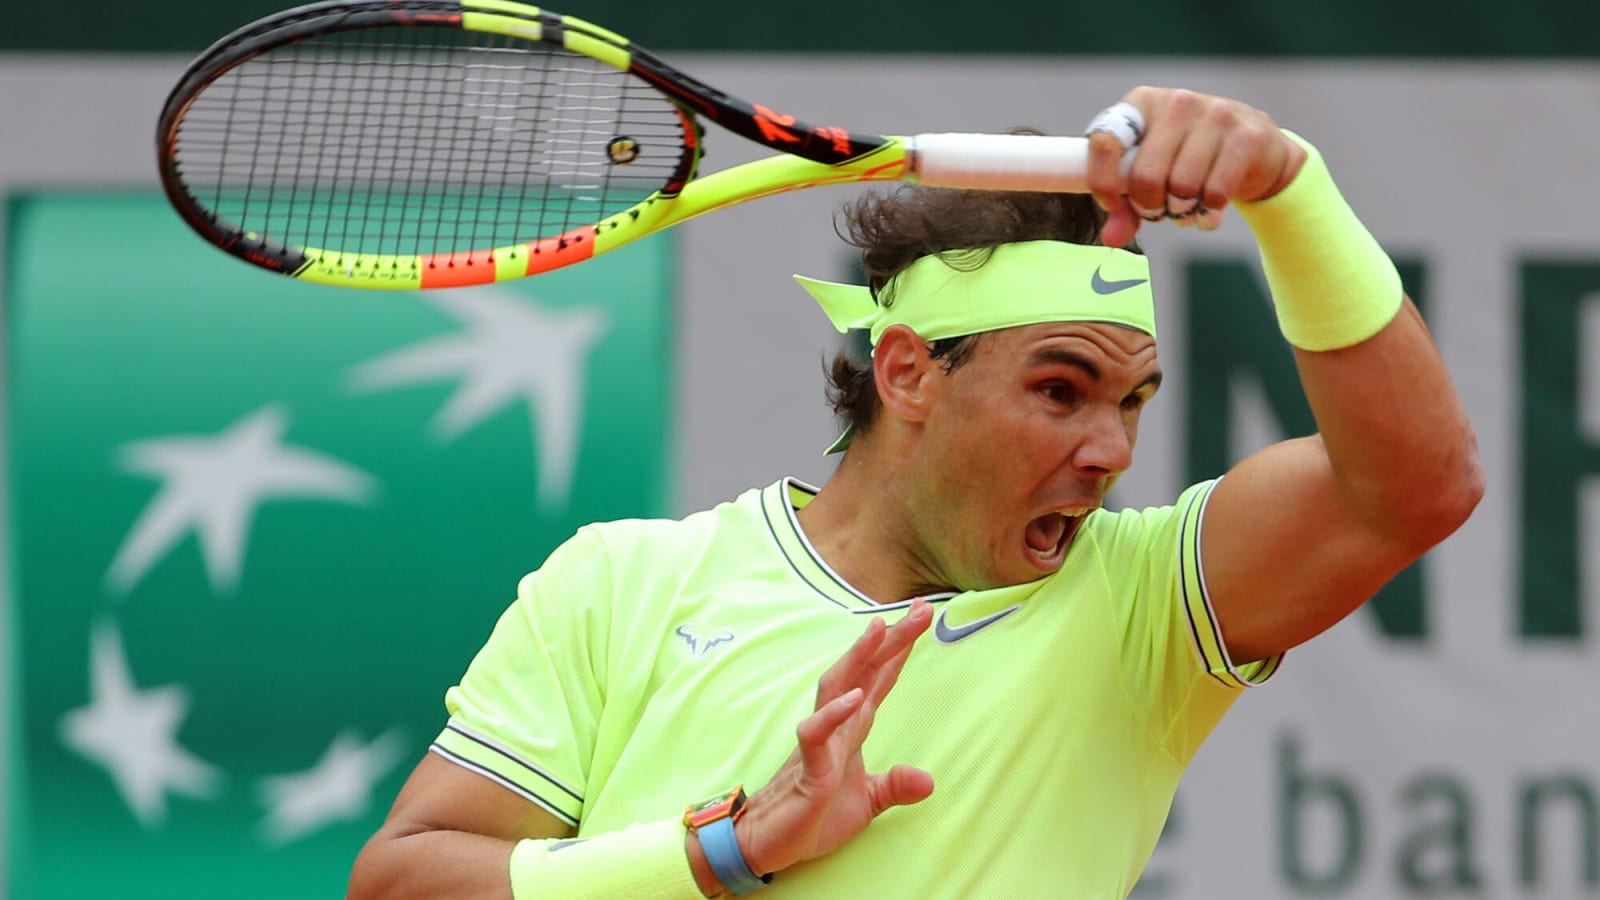 Tennis fans should enjoy watching Rafael Nadal while they still can, says golf pro Yardbarker